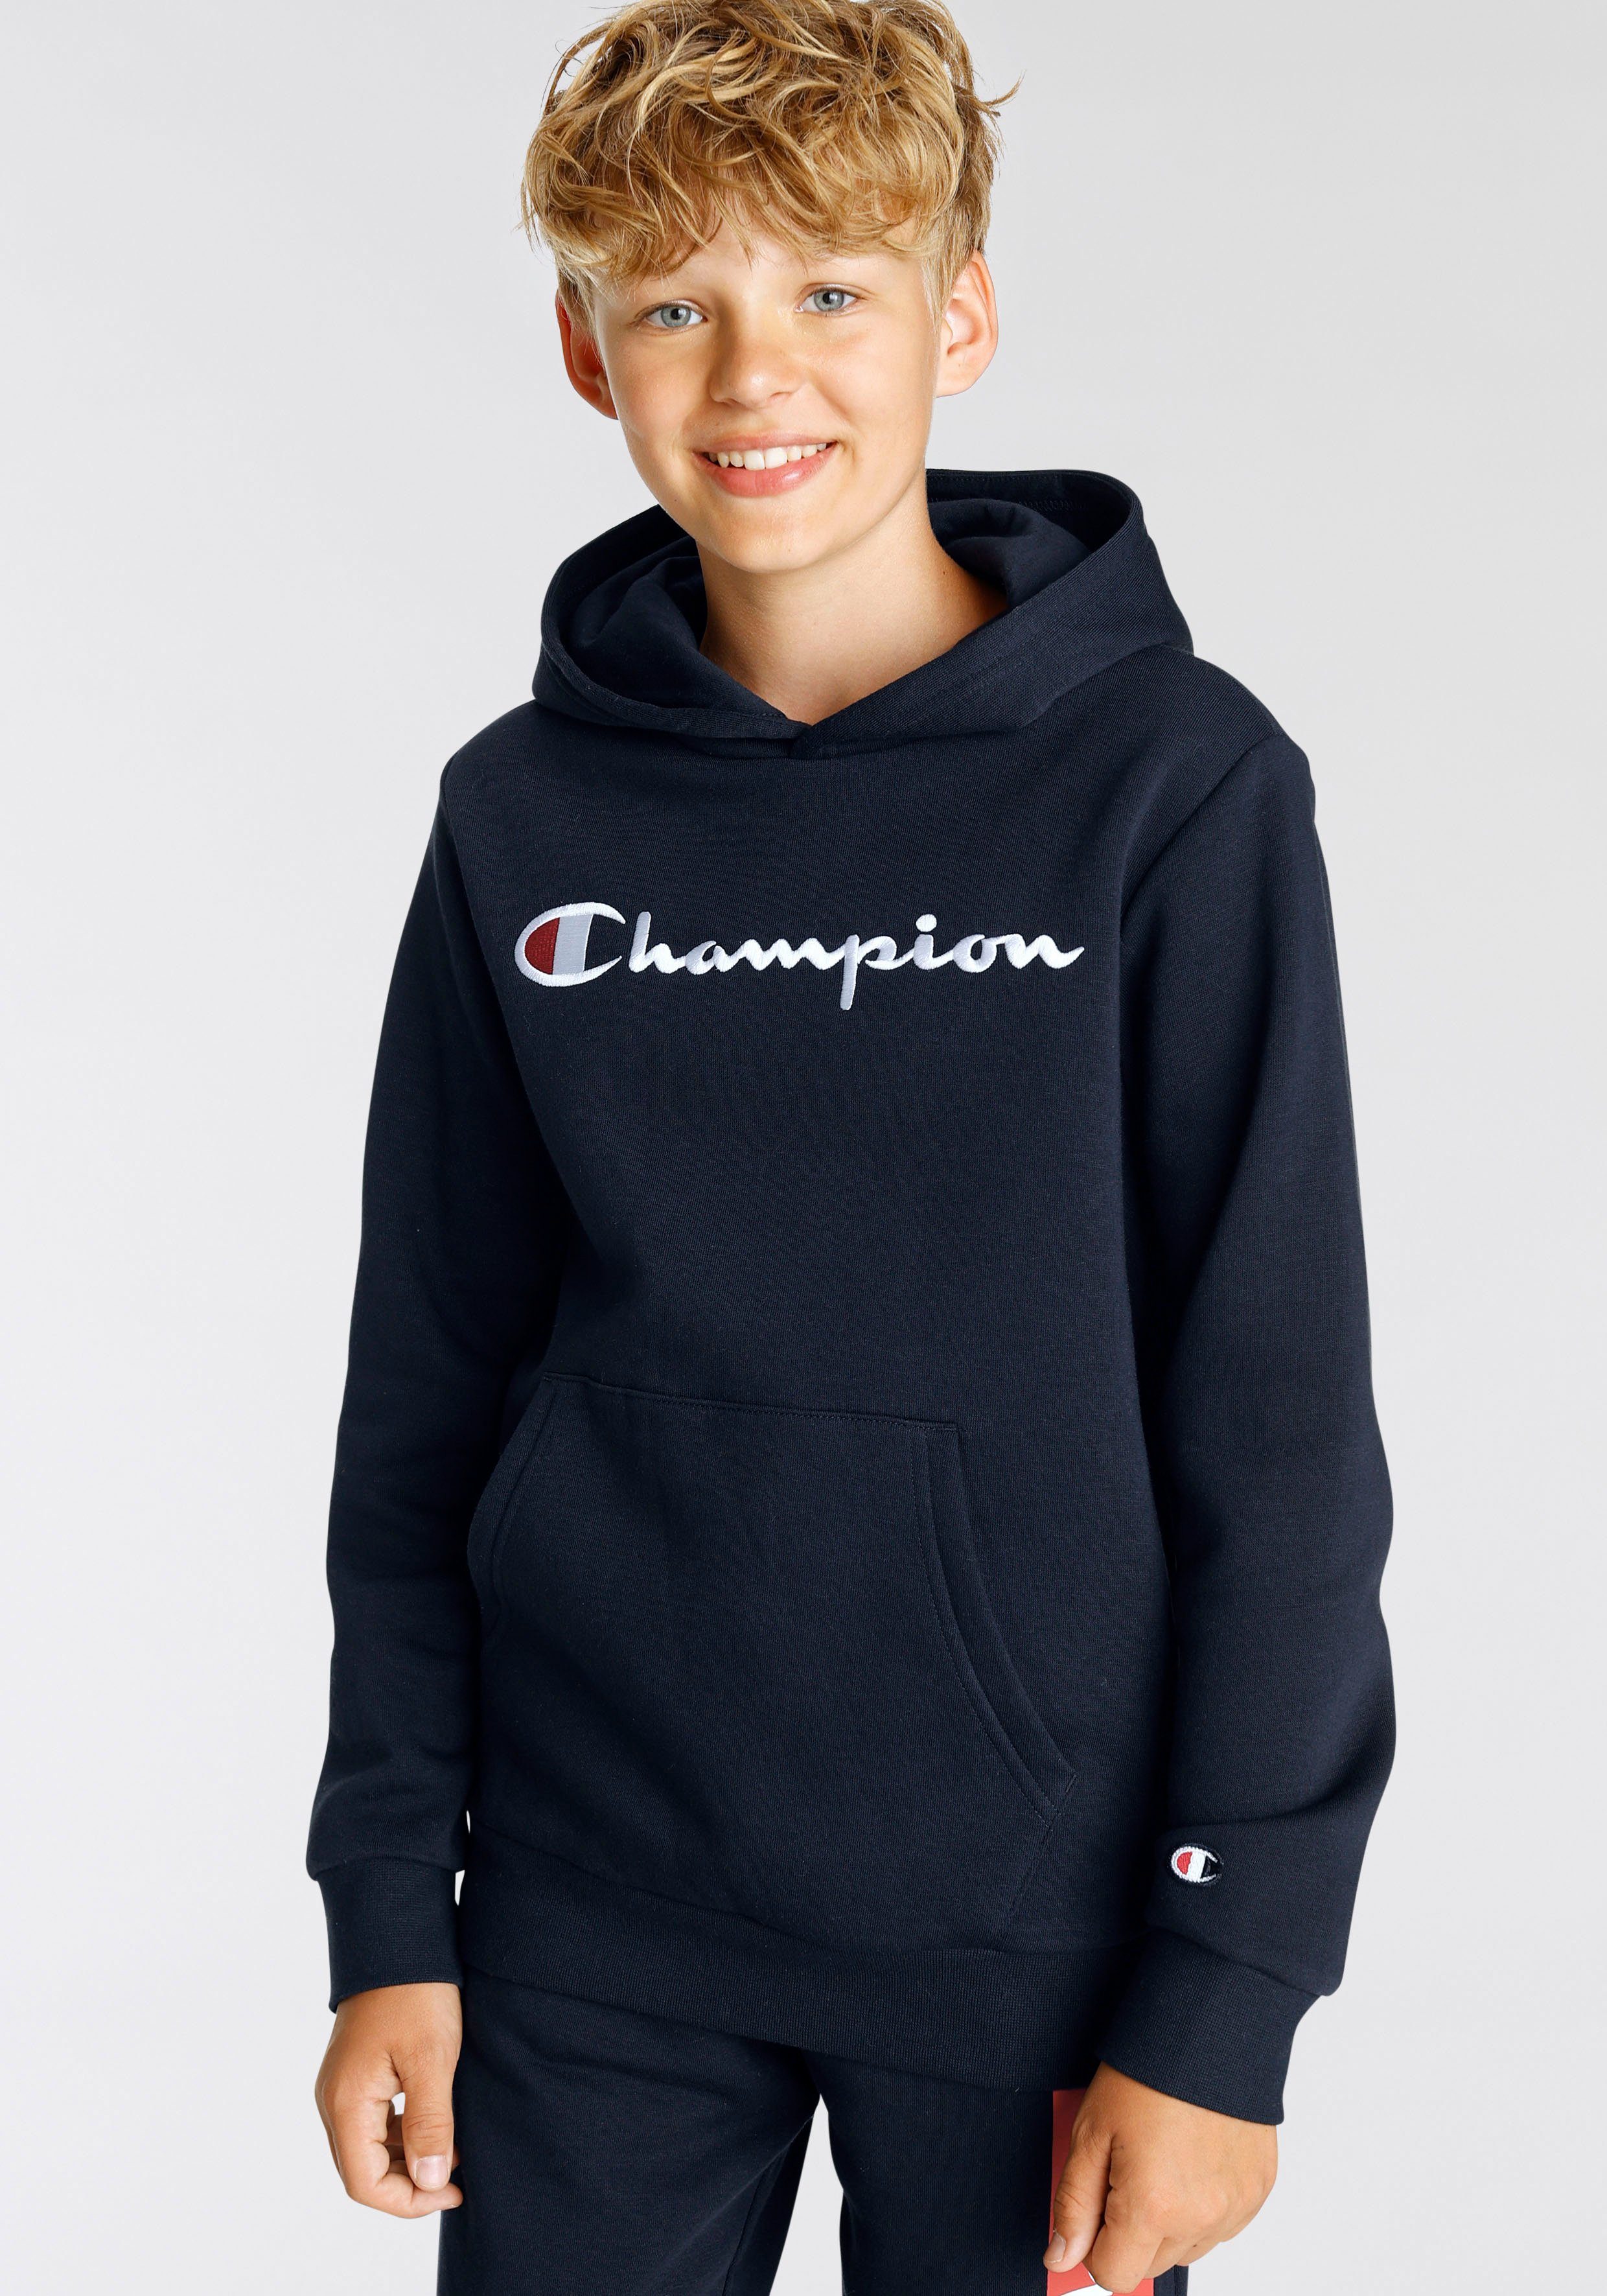 Champion Classic Kinder Sweatshirt Hooded Sweatshirt large für - Logo marine